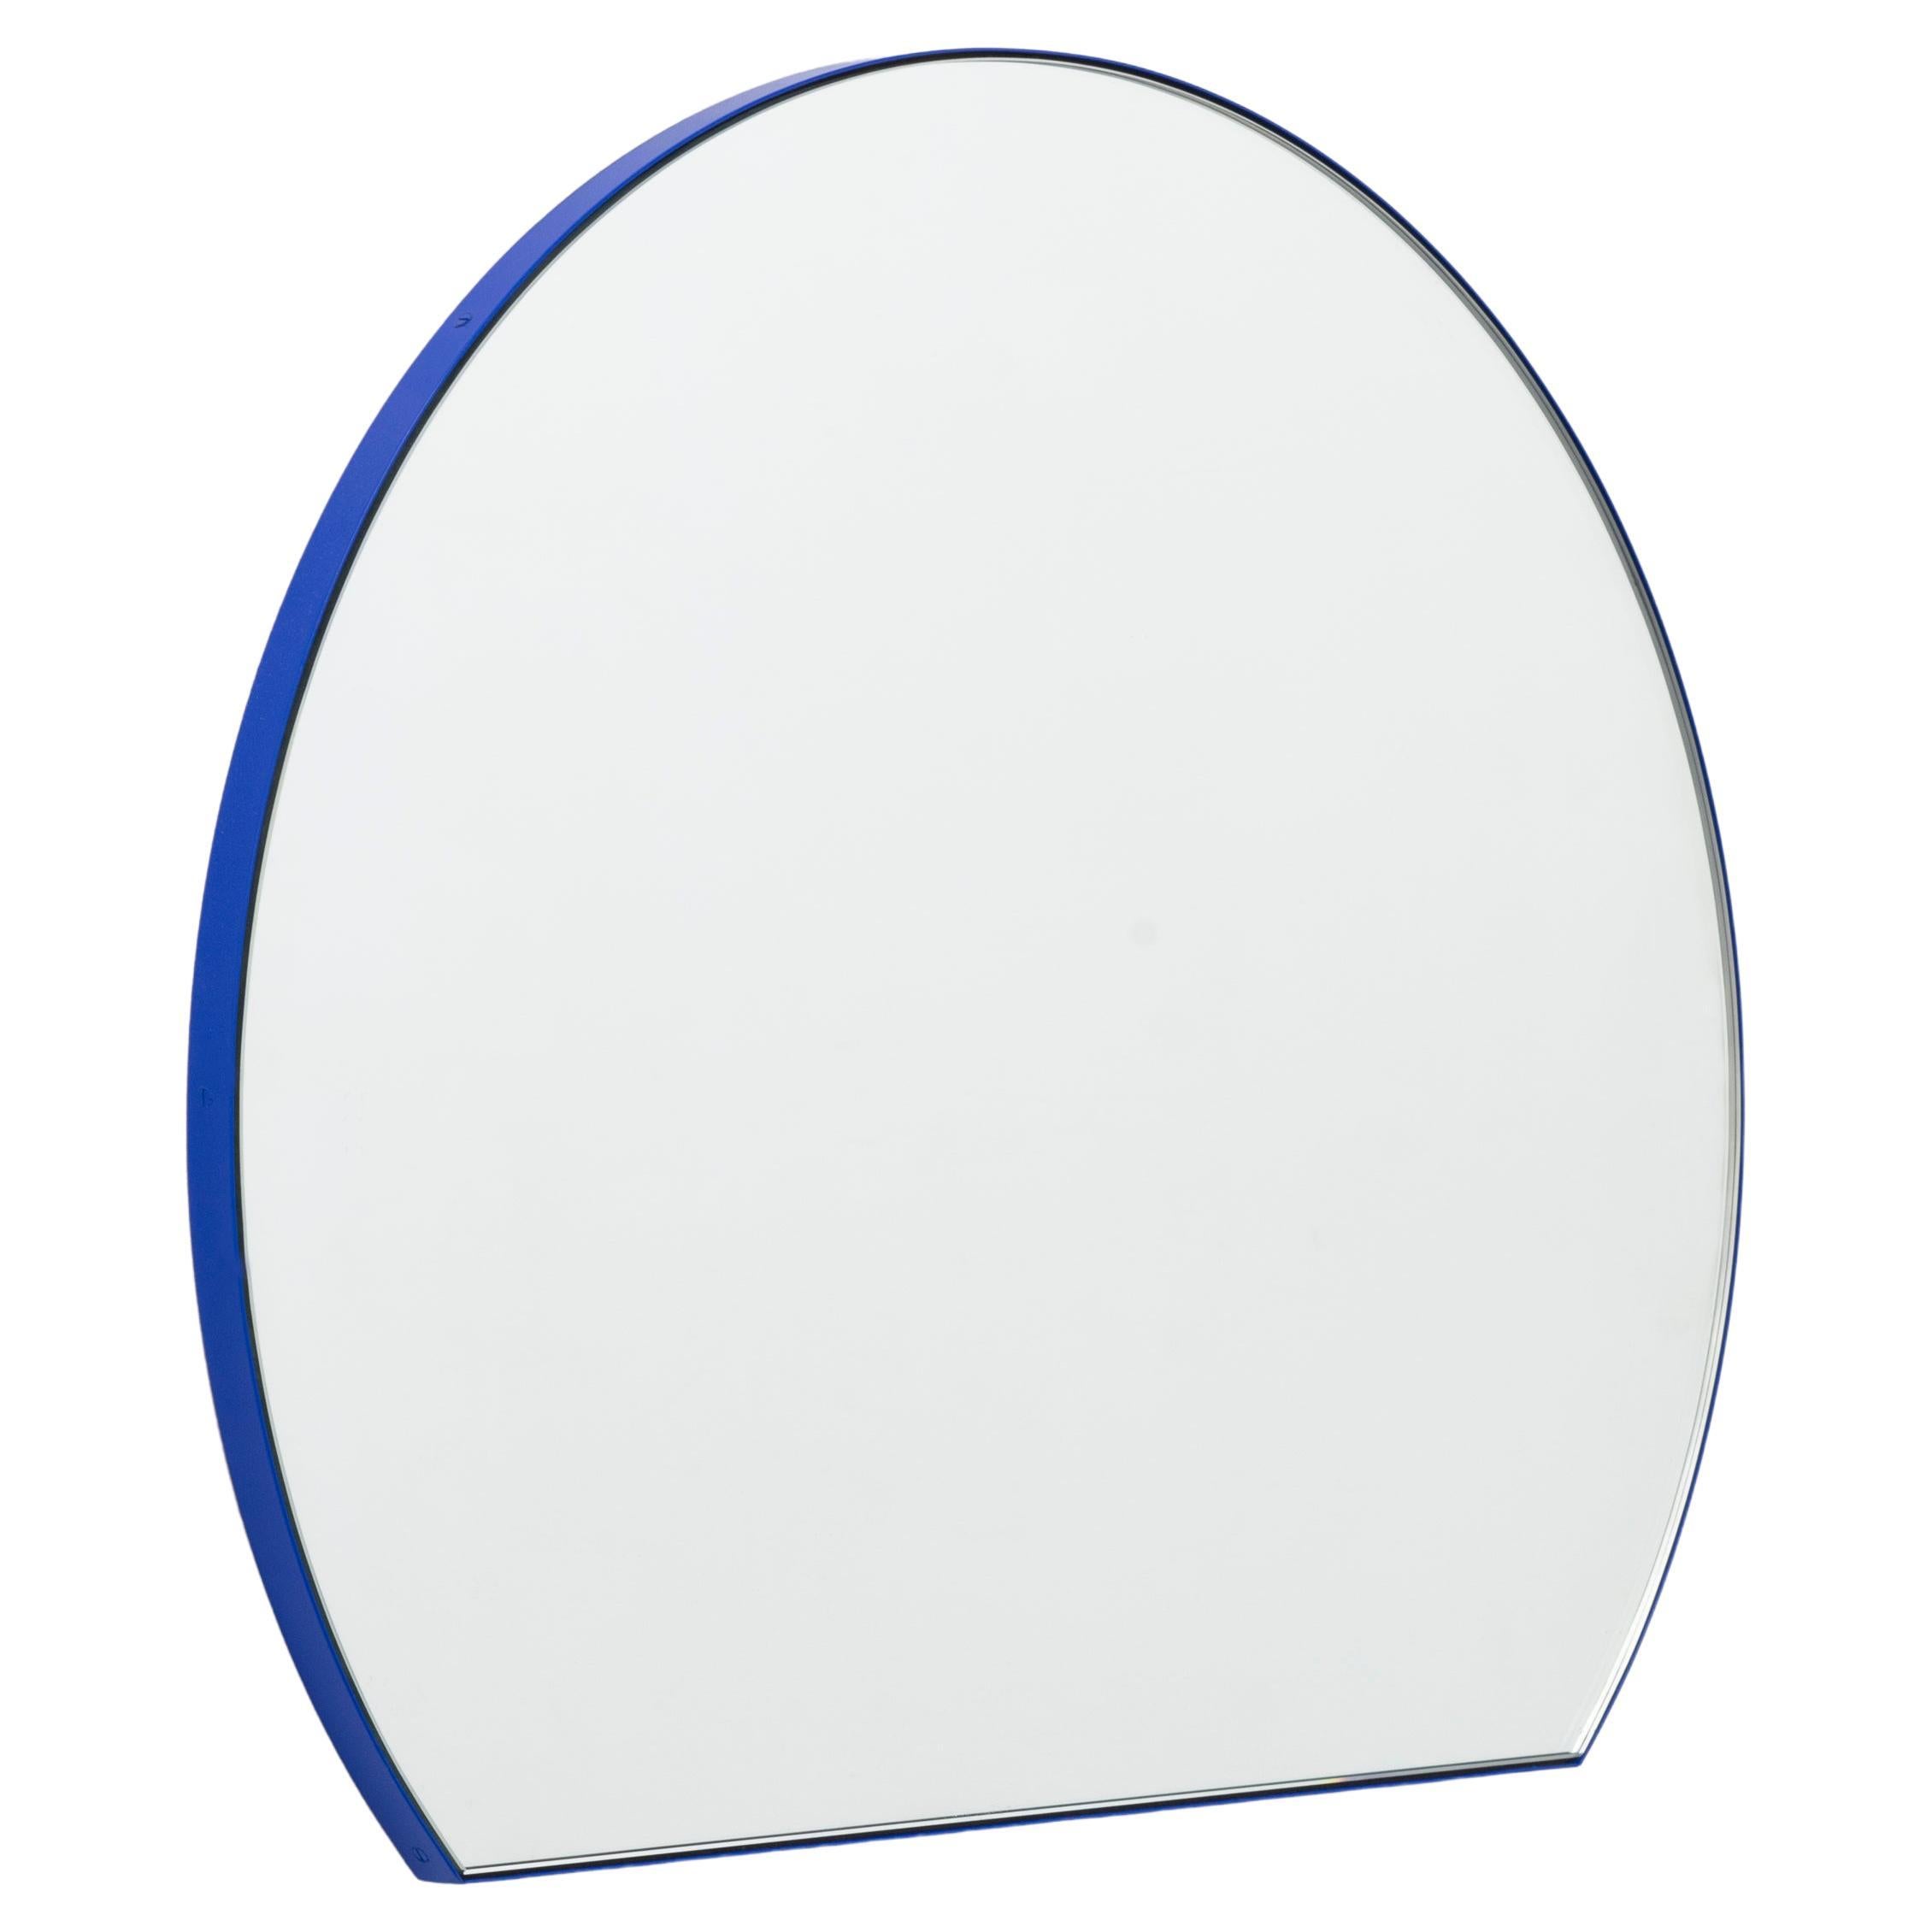 Orbis Trecus Cropped Circular Modern Mirror with Blue Frame, Regular